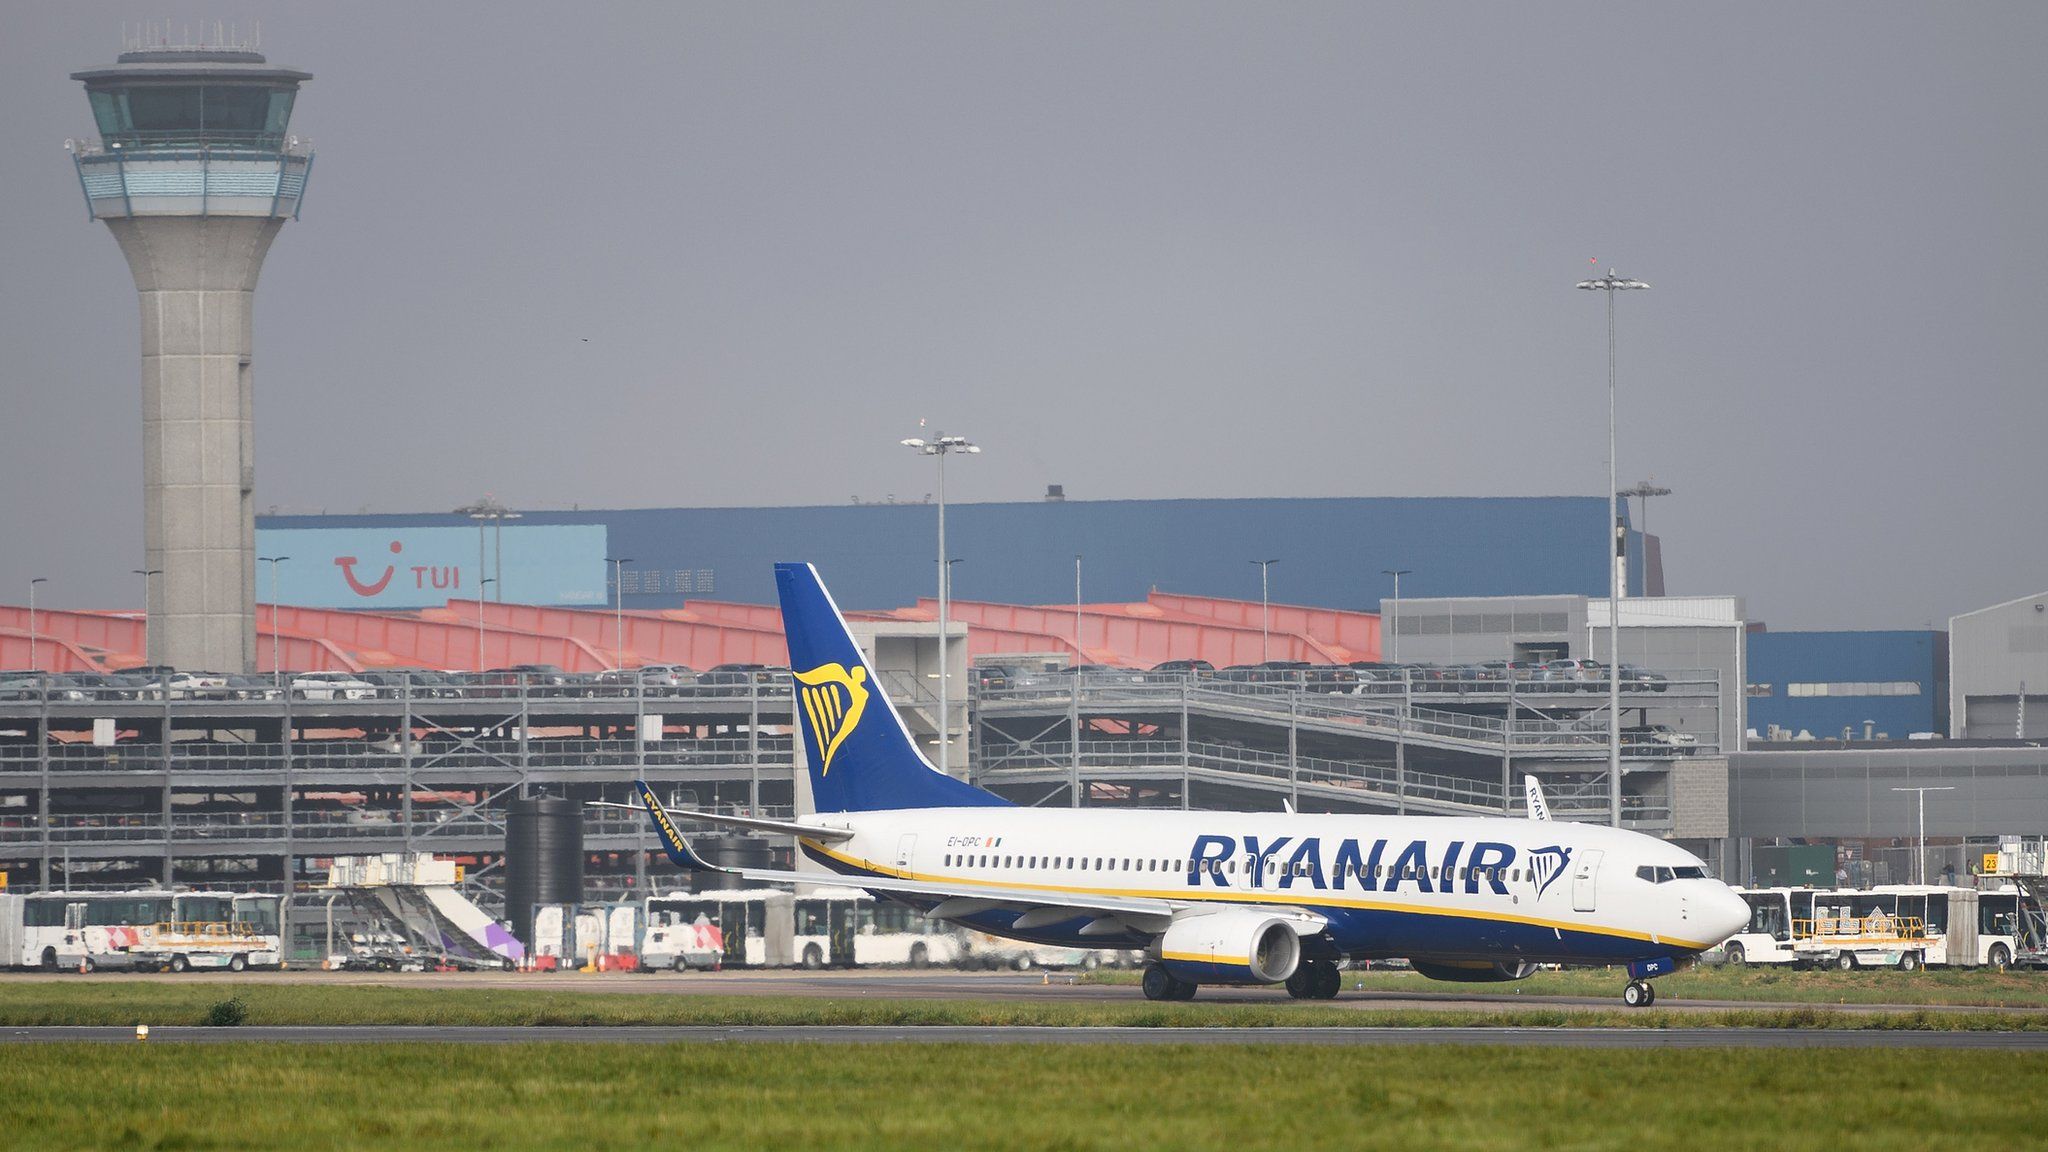 Ryanair plane at Luton Airport